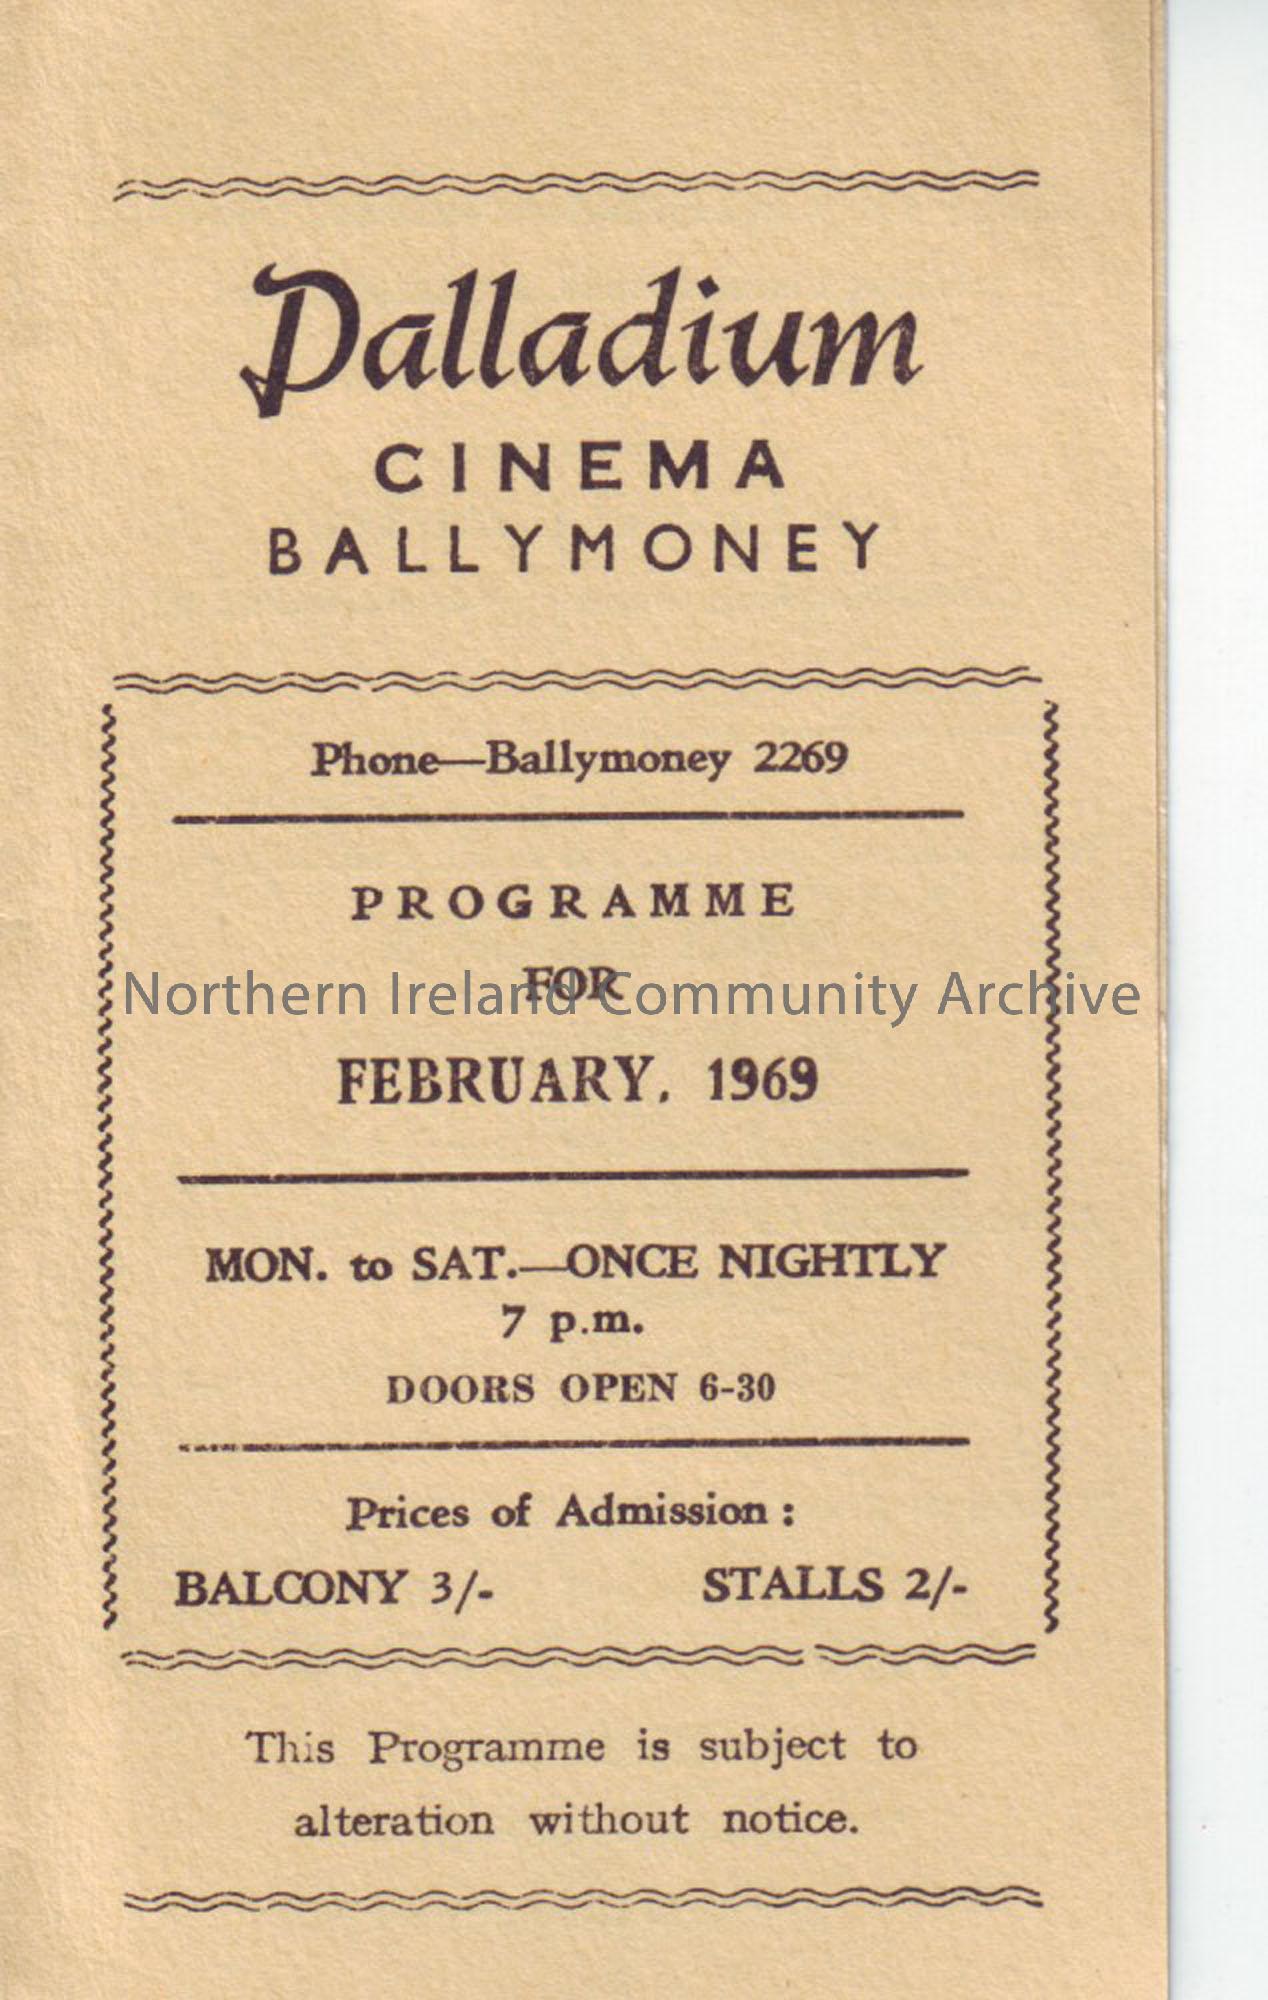 cream monthly programme for Ballymoney Palladium cinema- February 1969